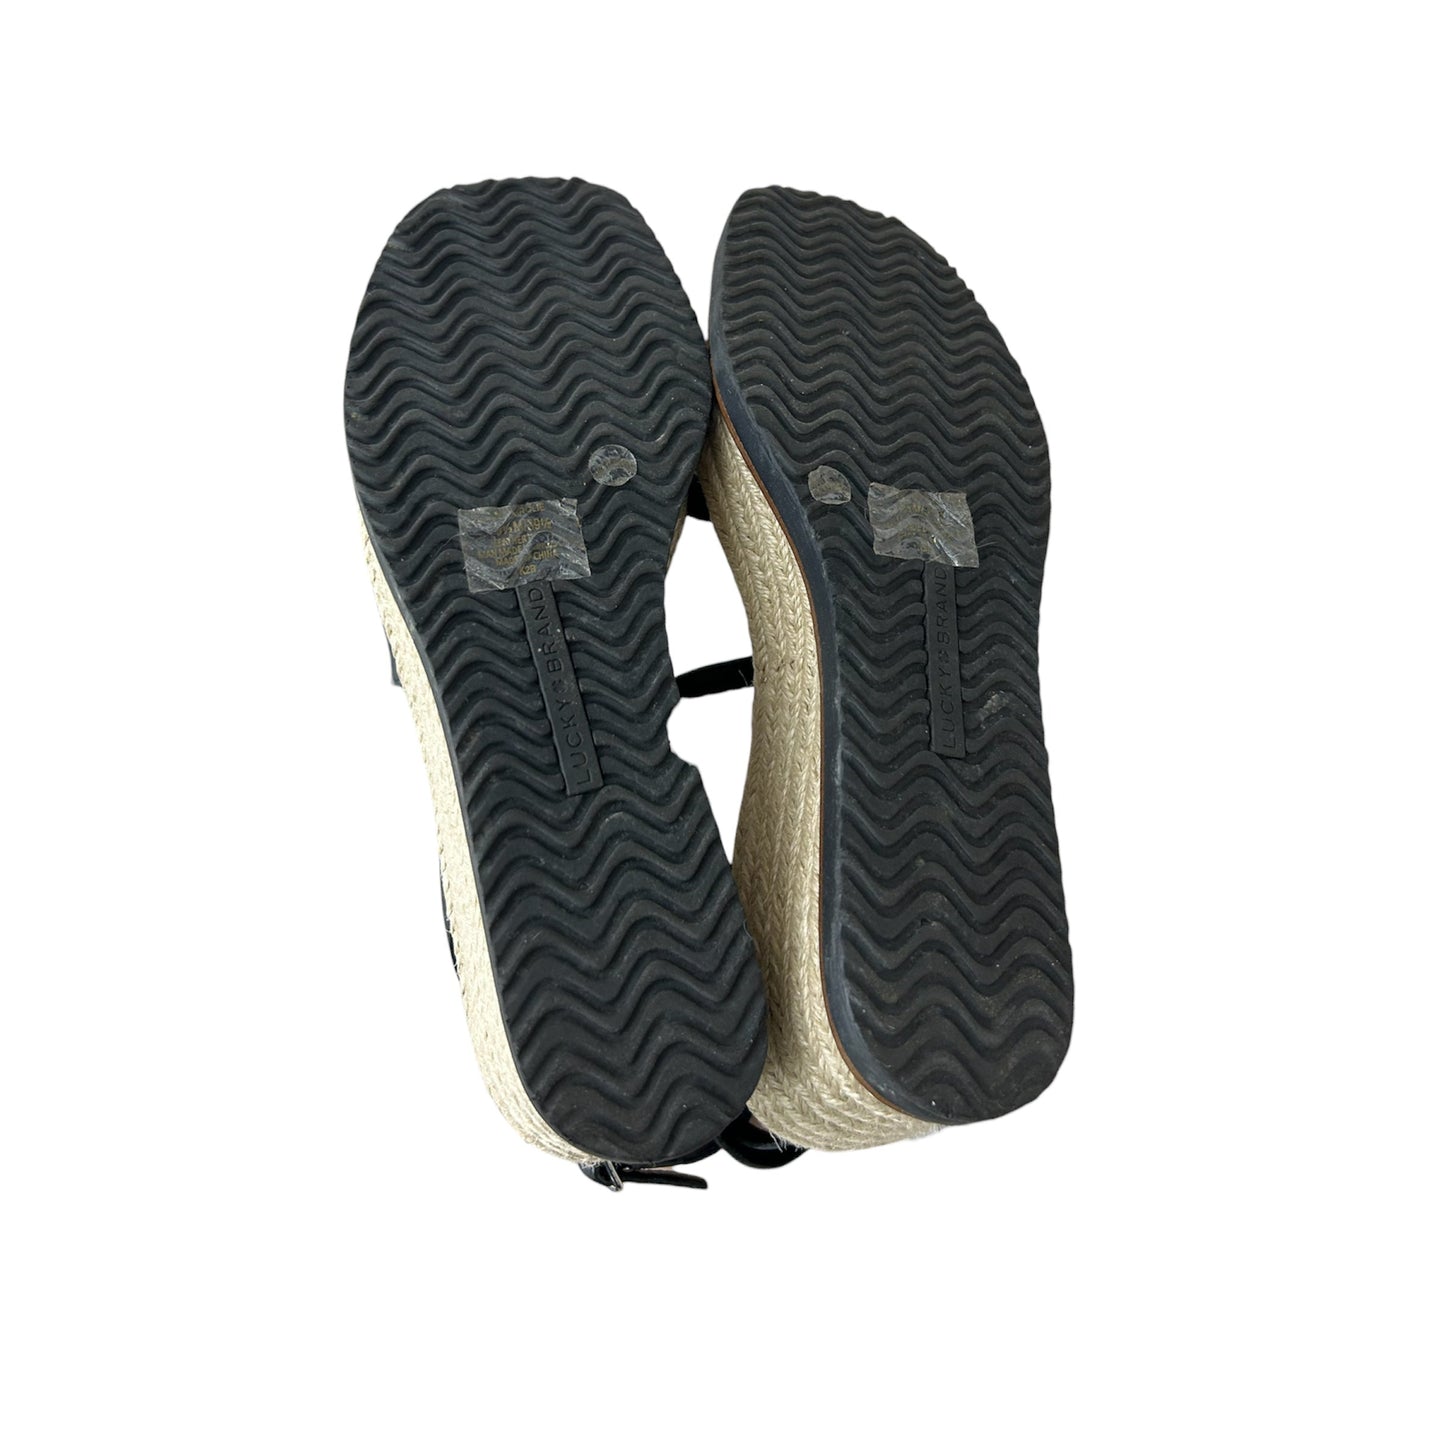 Sandals Heels Platform By Lucky Brand  Size: 8.5